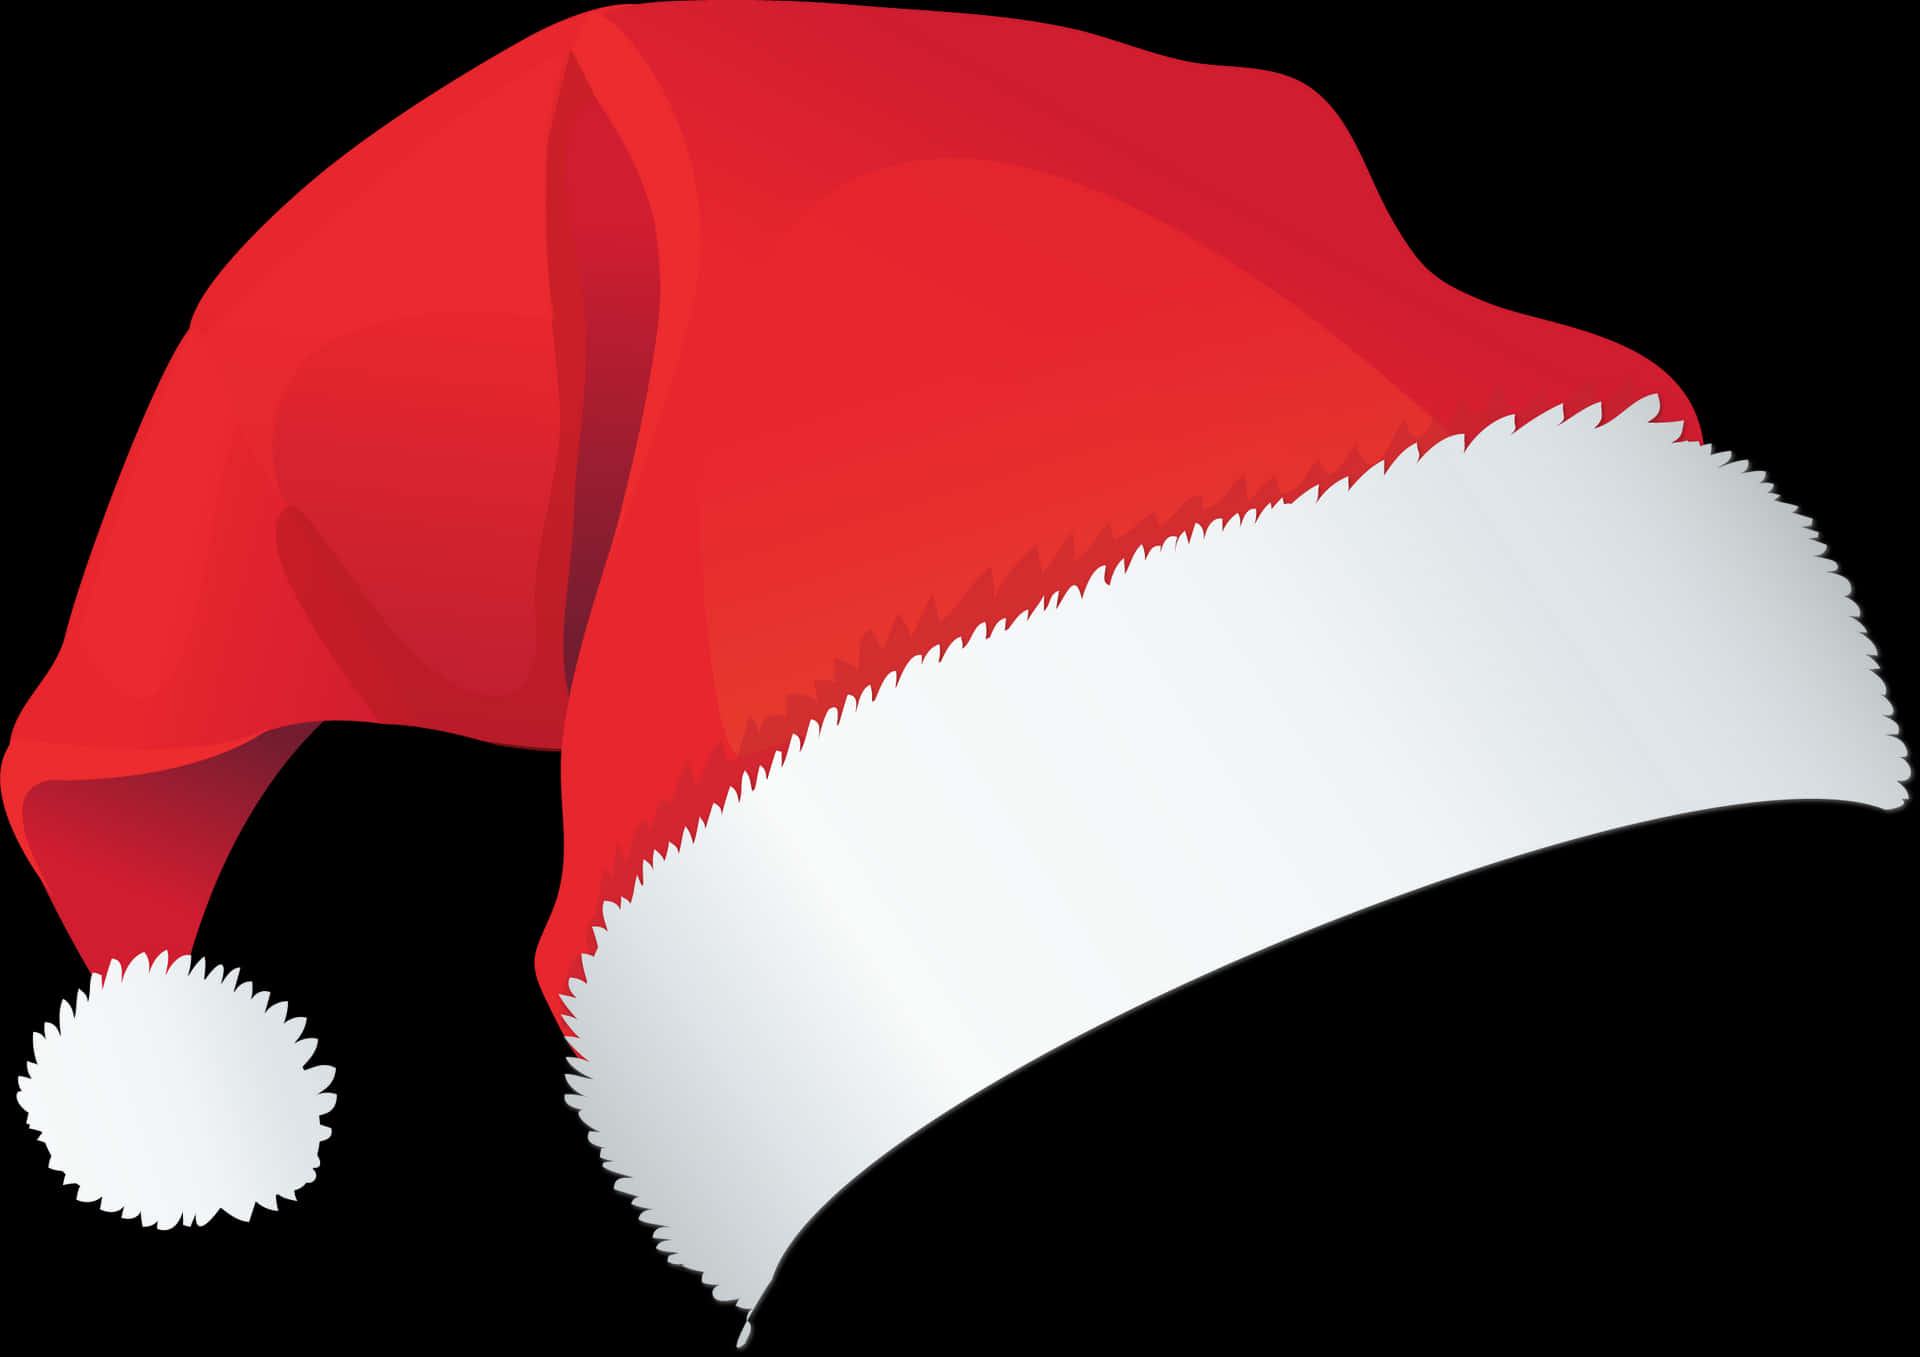 Red Christmas Santa Hat Illustration PNG